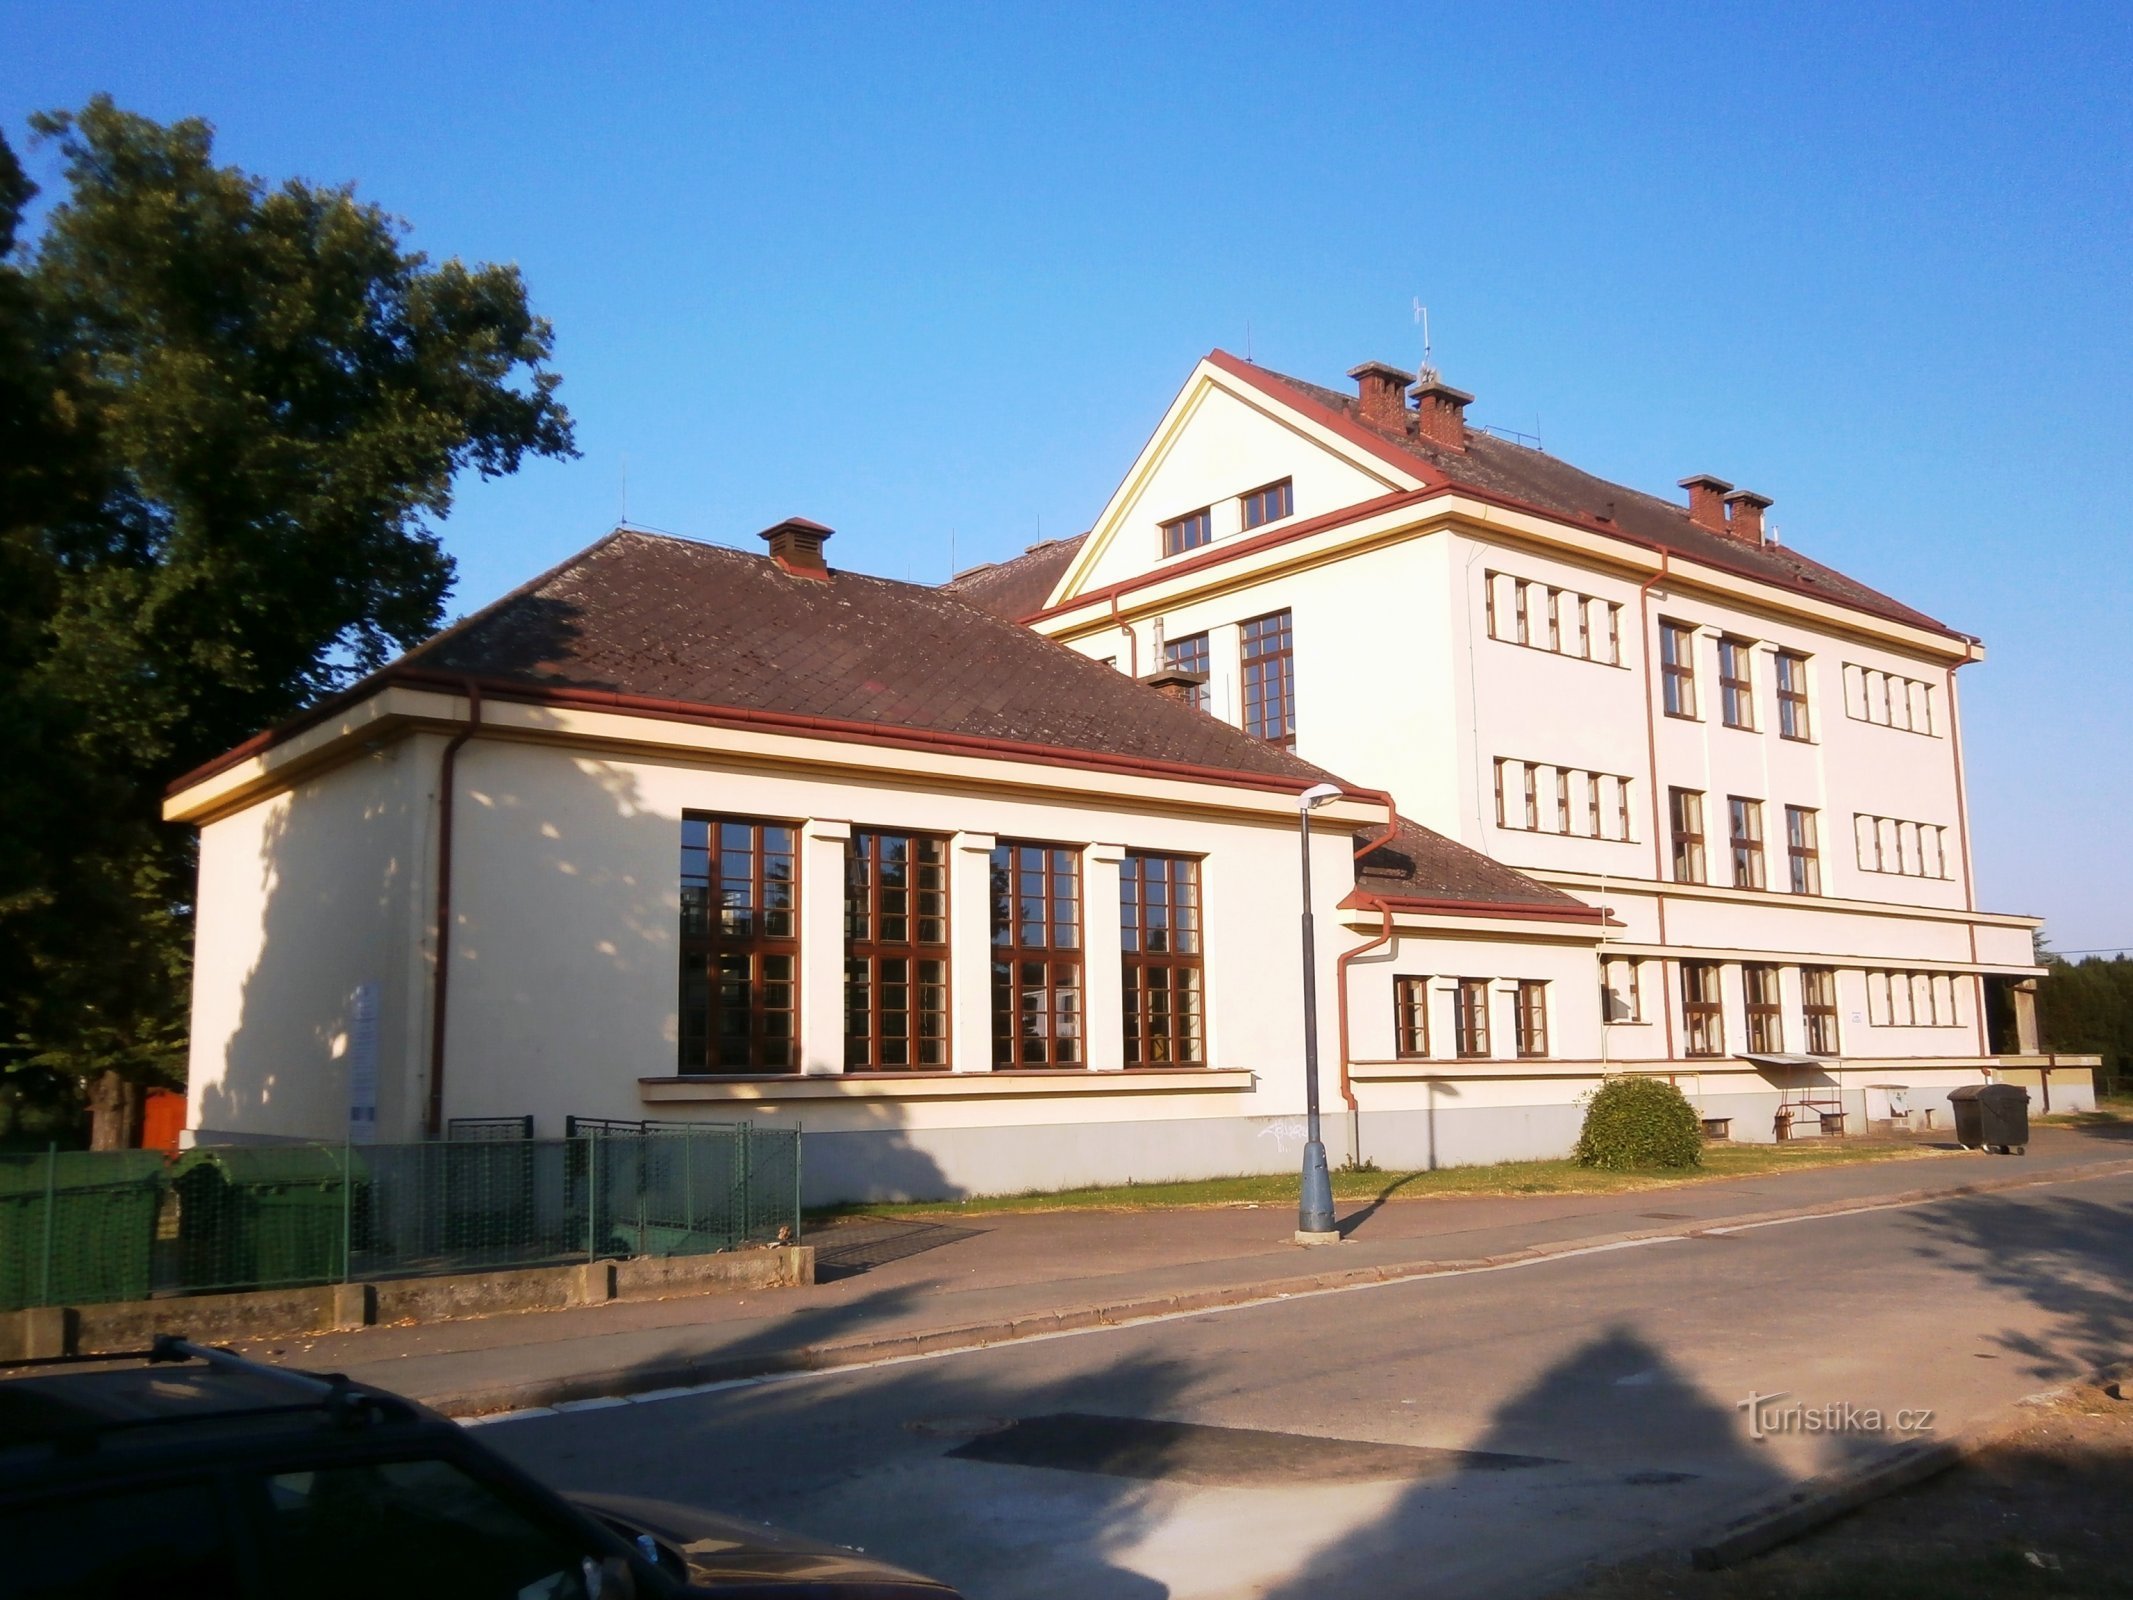 Plotiště nad Labem 的 Masaryk 小学 (Hradec Králové, 28.7.2013/XNUMX/XNUMX)